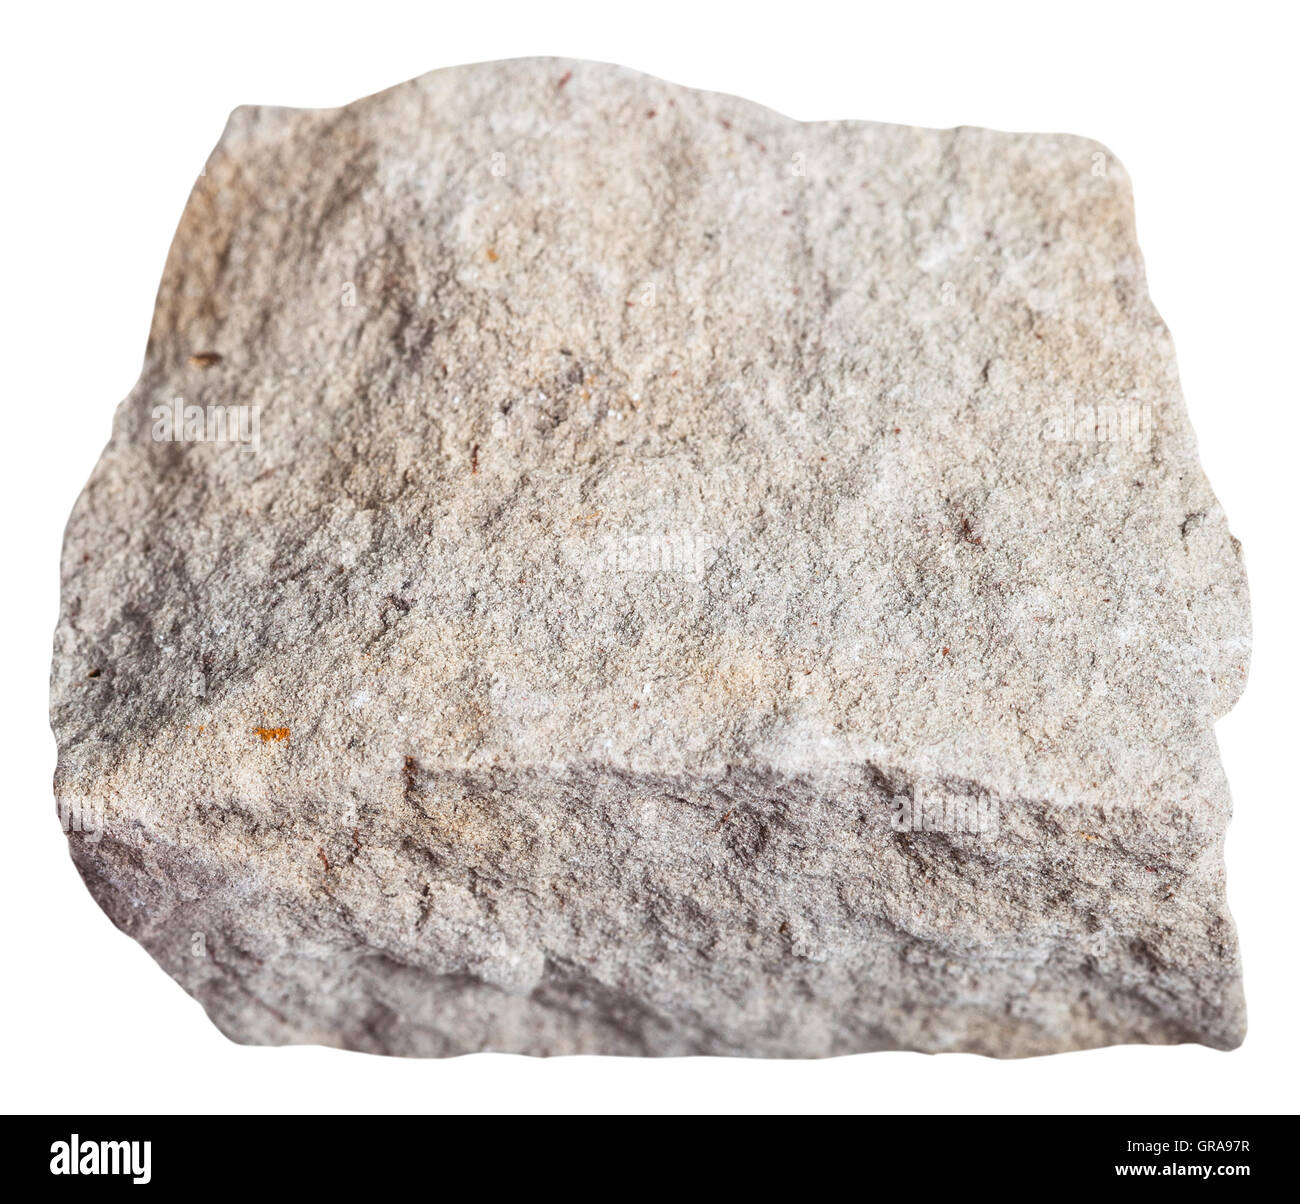 macro shooting of sedimentary rock specimens - Dolomite mineral isolated on white background Stock Photo